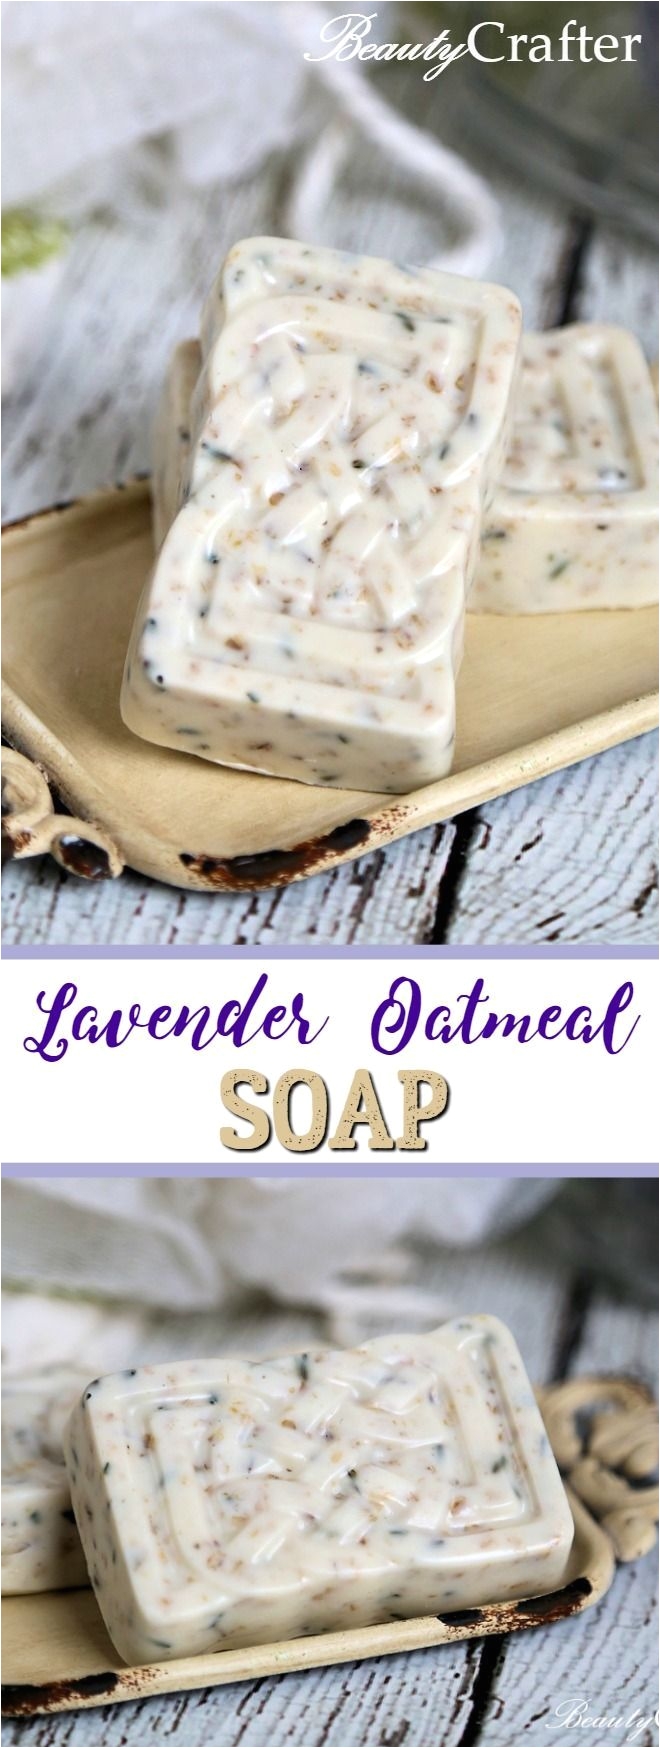 Homemade Decorative soap Bars Homemade Lavender Oatmeal soap Recipe Spa Products Pinterest